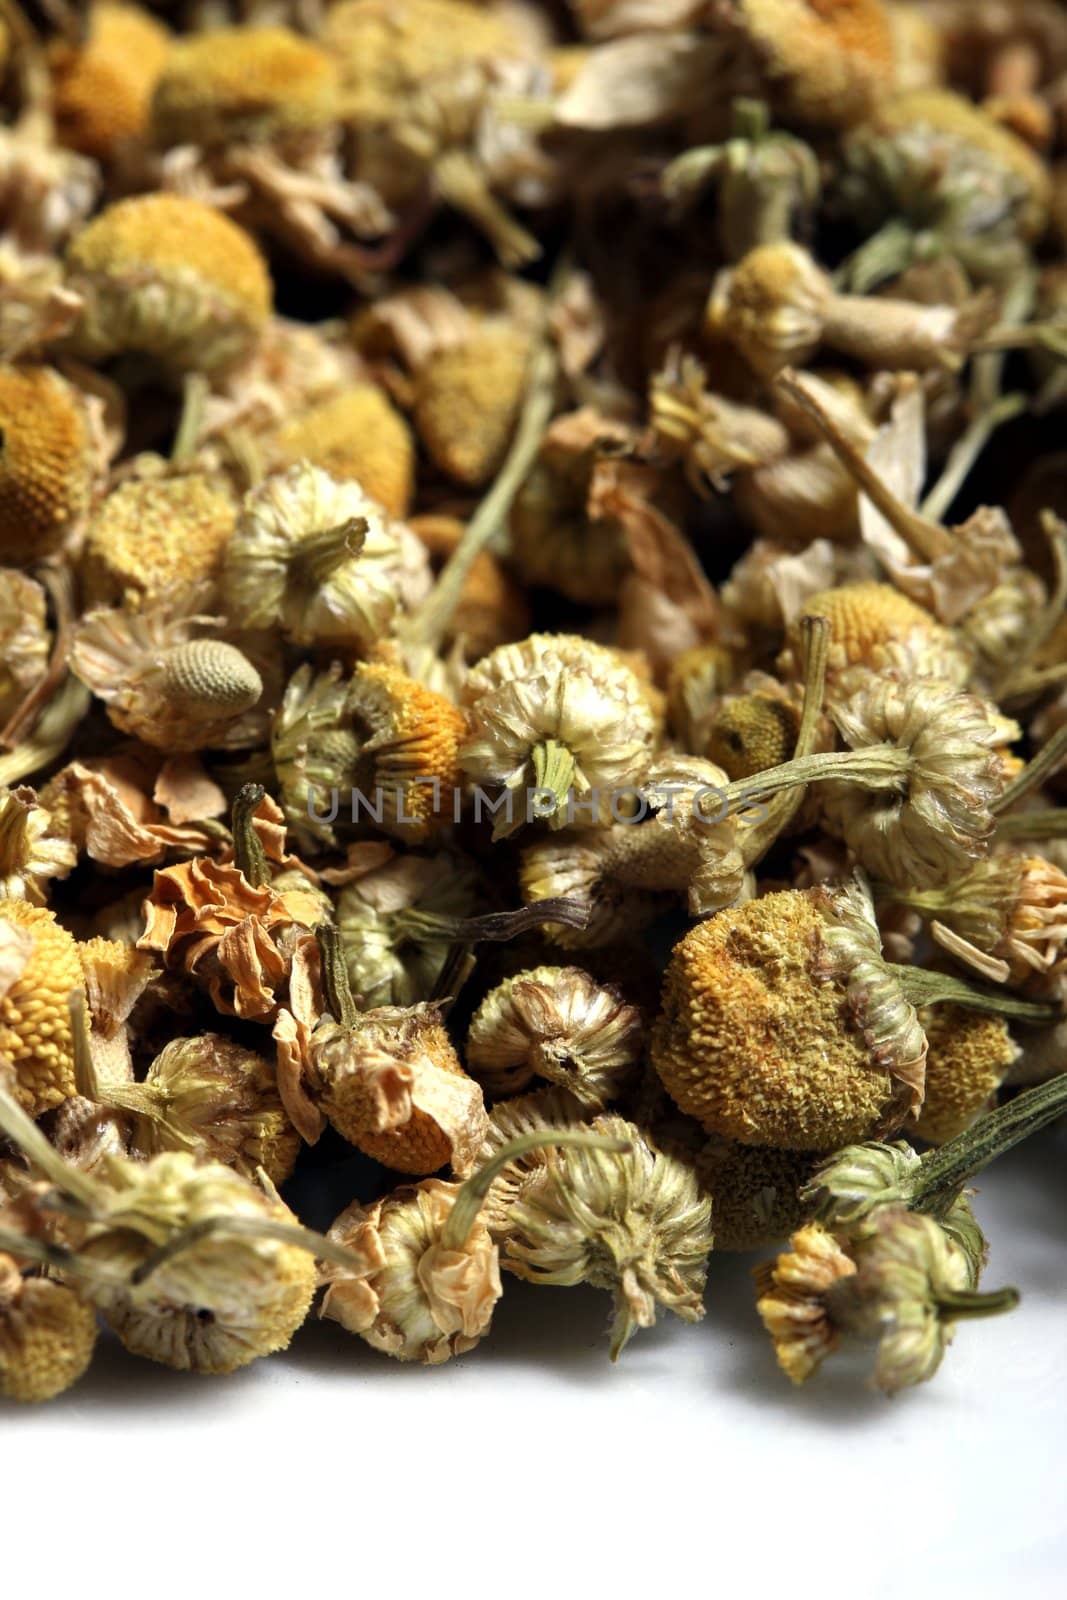 dried chamomile flowers by Teka77